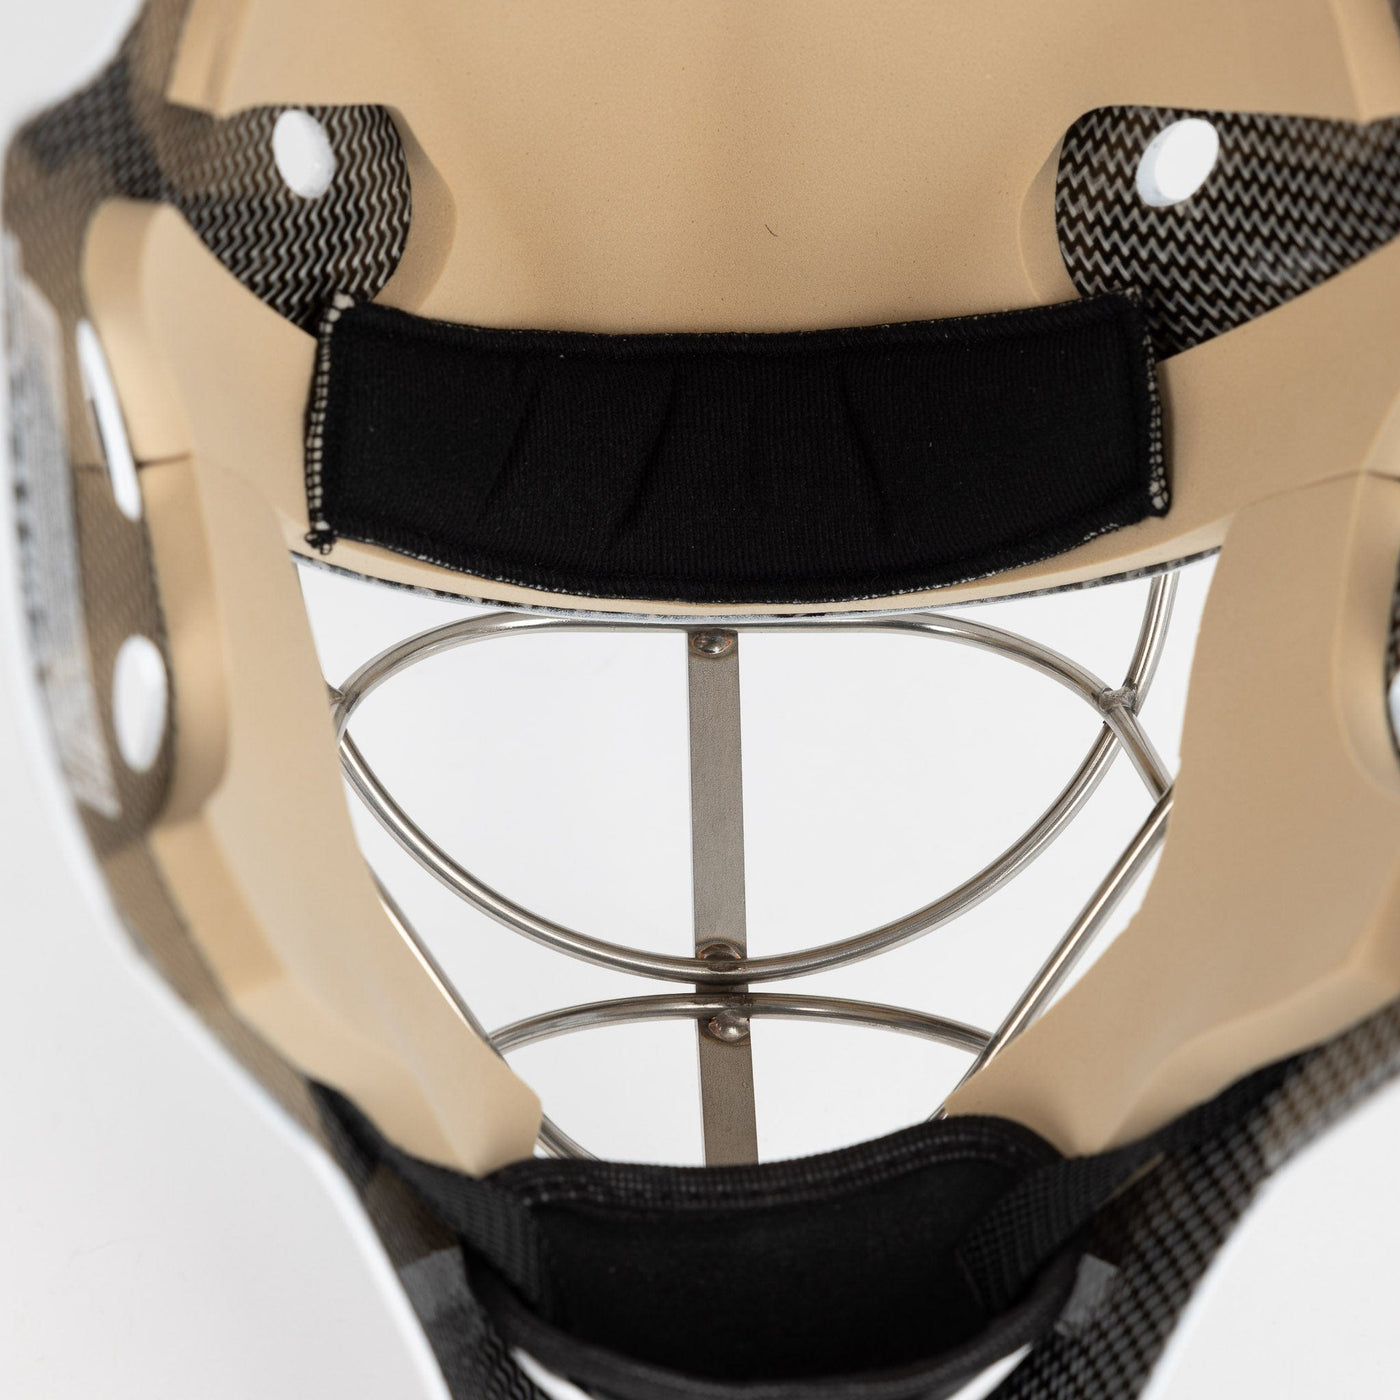 Sportmask Pro X Senior Goalie Mask - The Hockey Shop Source For Sports